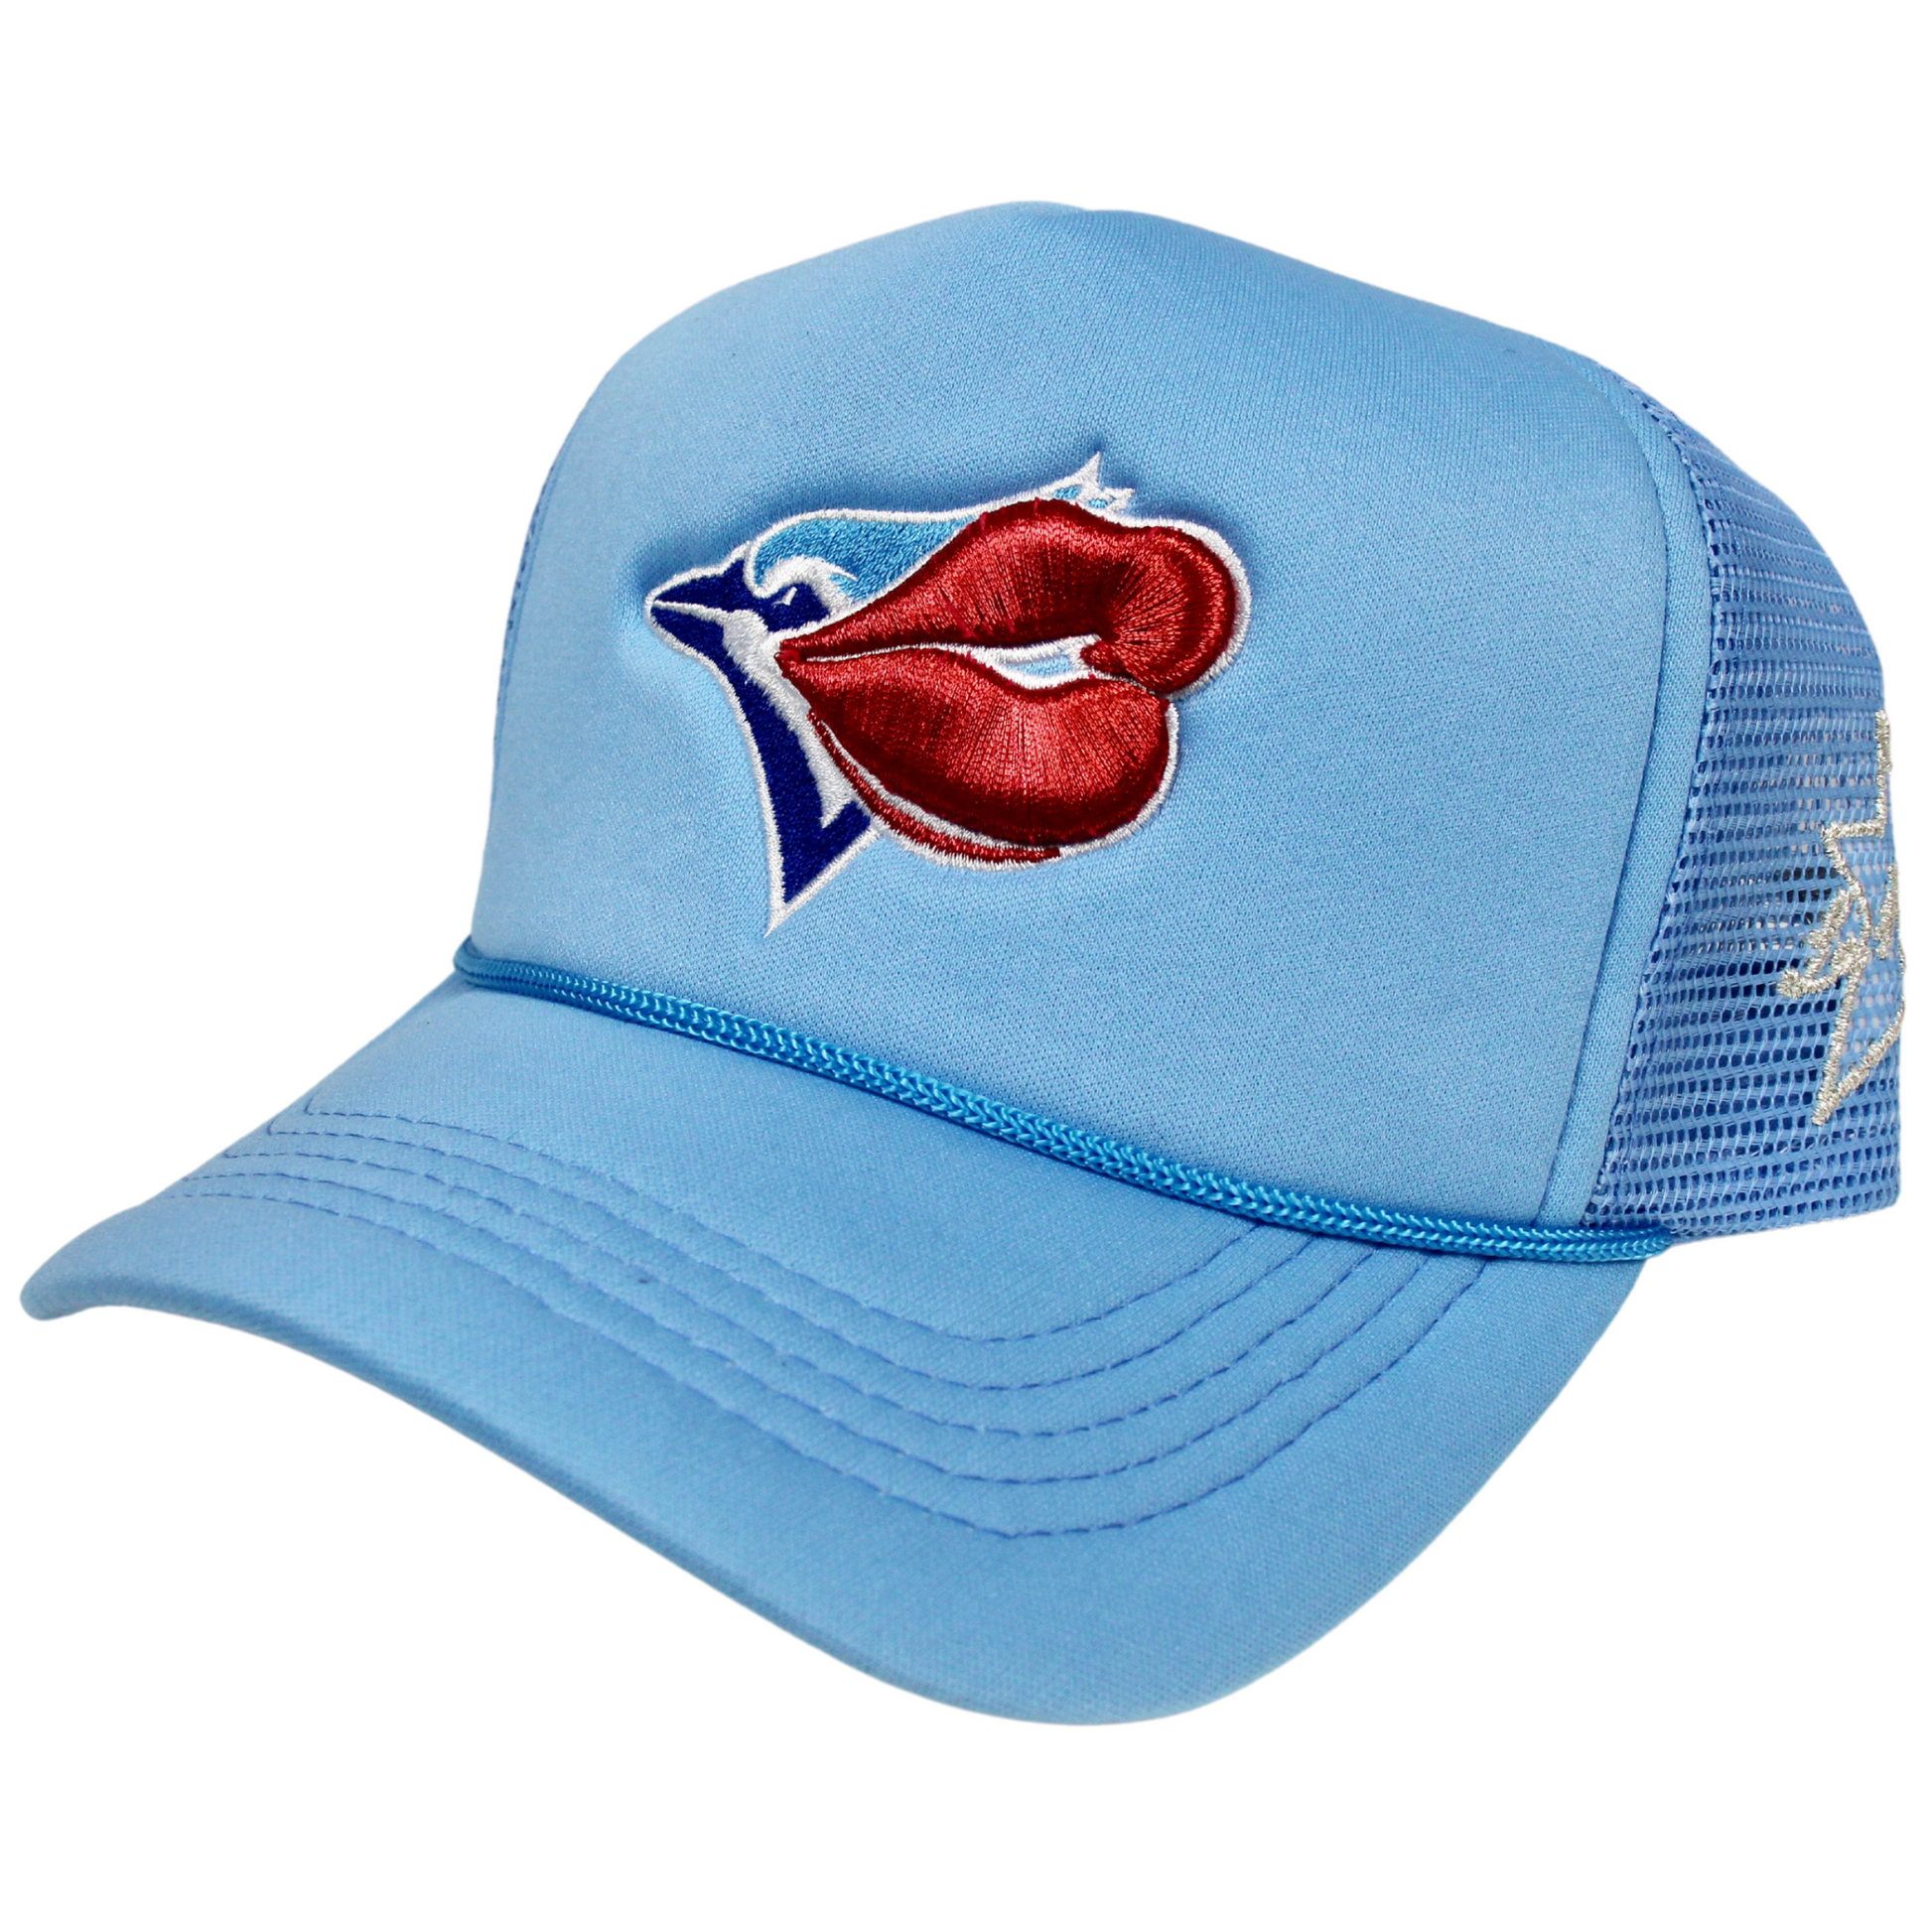 LaRopa L.A. Dodgers Royal Blue Kissing Lips Trucker Hat worn by